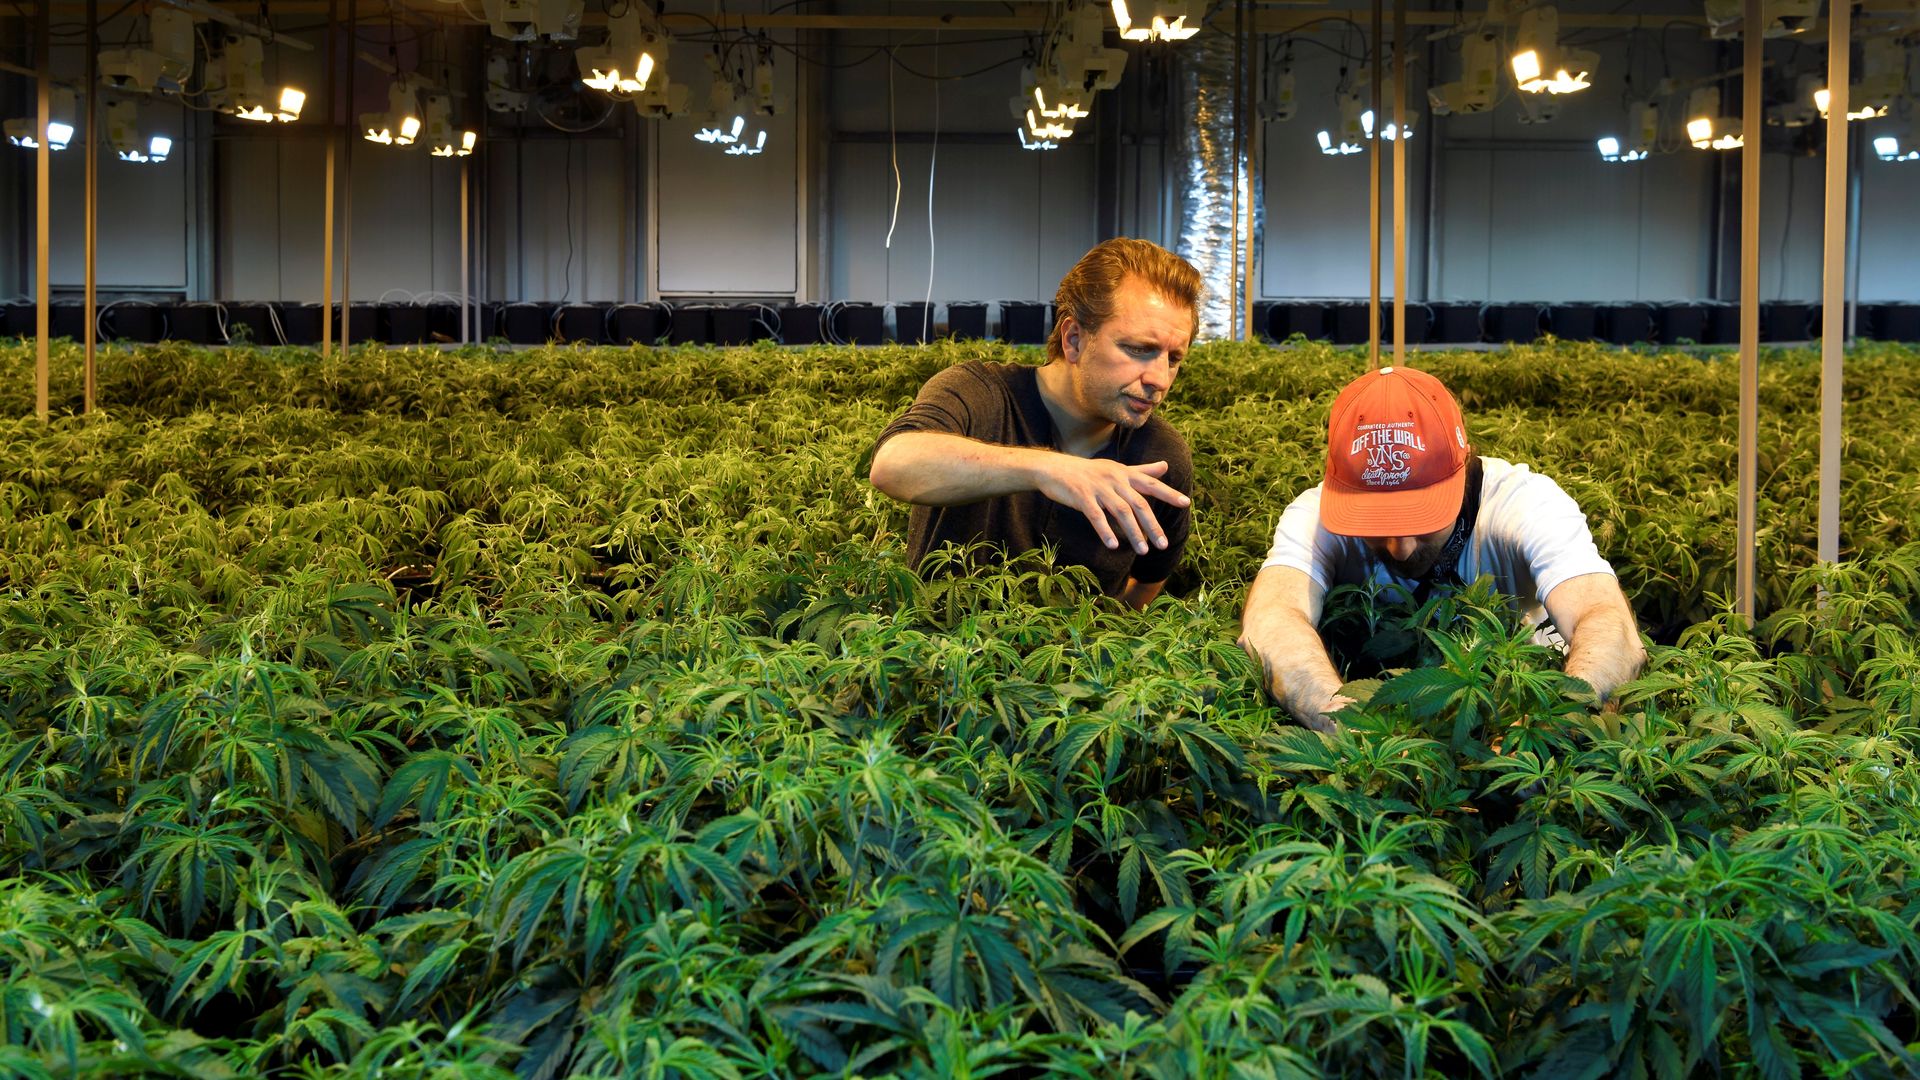 Two people tend to marijuana plants in a large warehouse full of marijuana plants